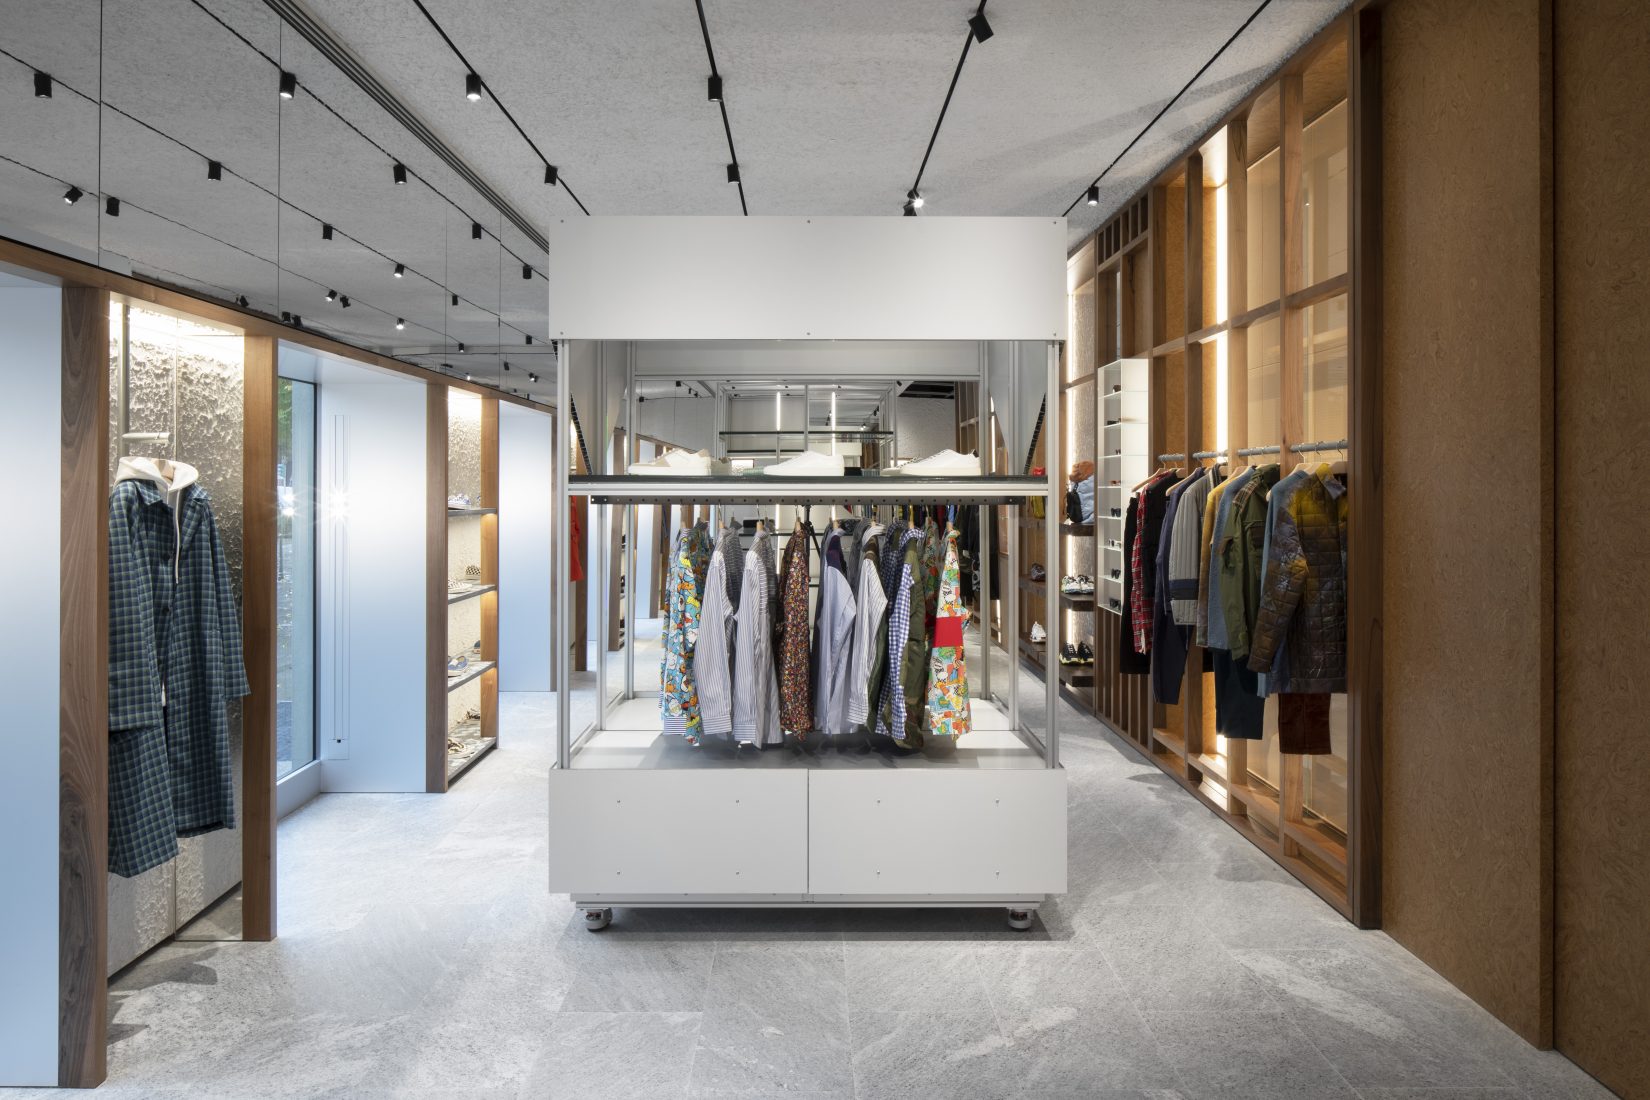 Luxury retail as reimagined by Aldo Carpinteri’s vision